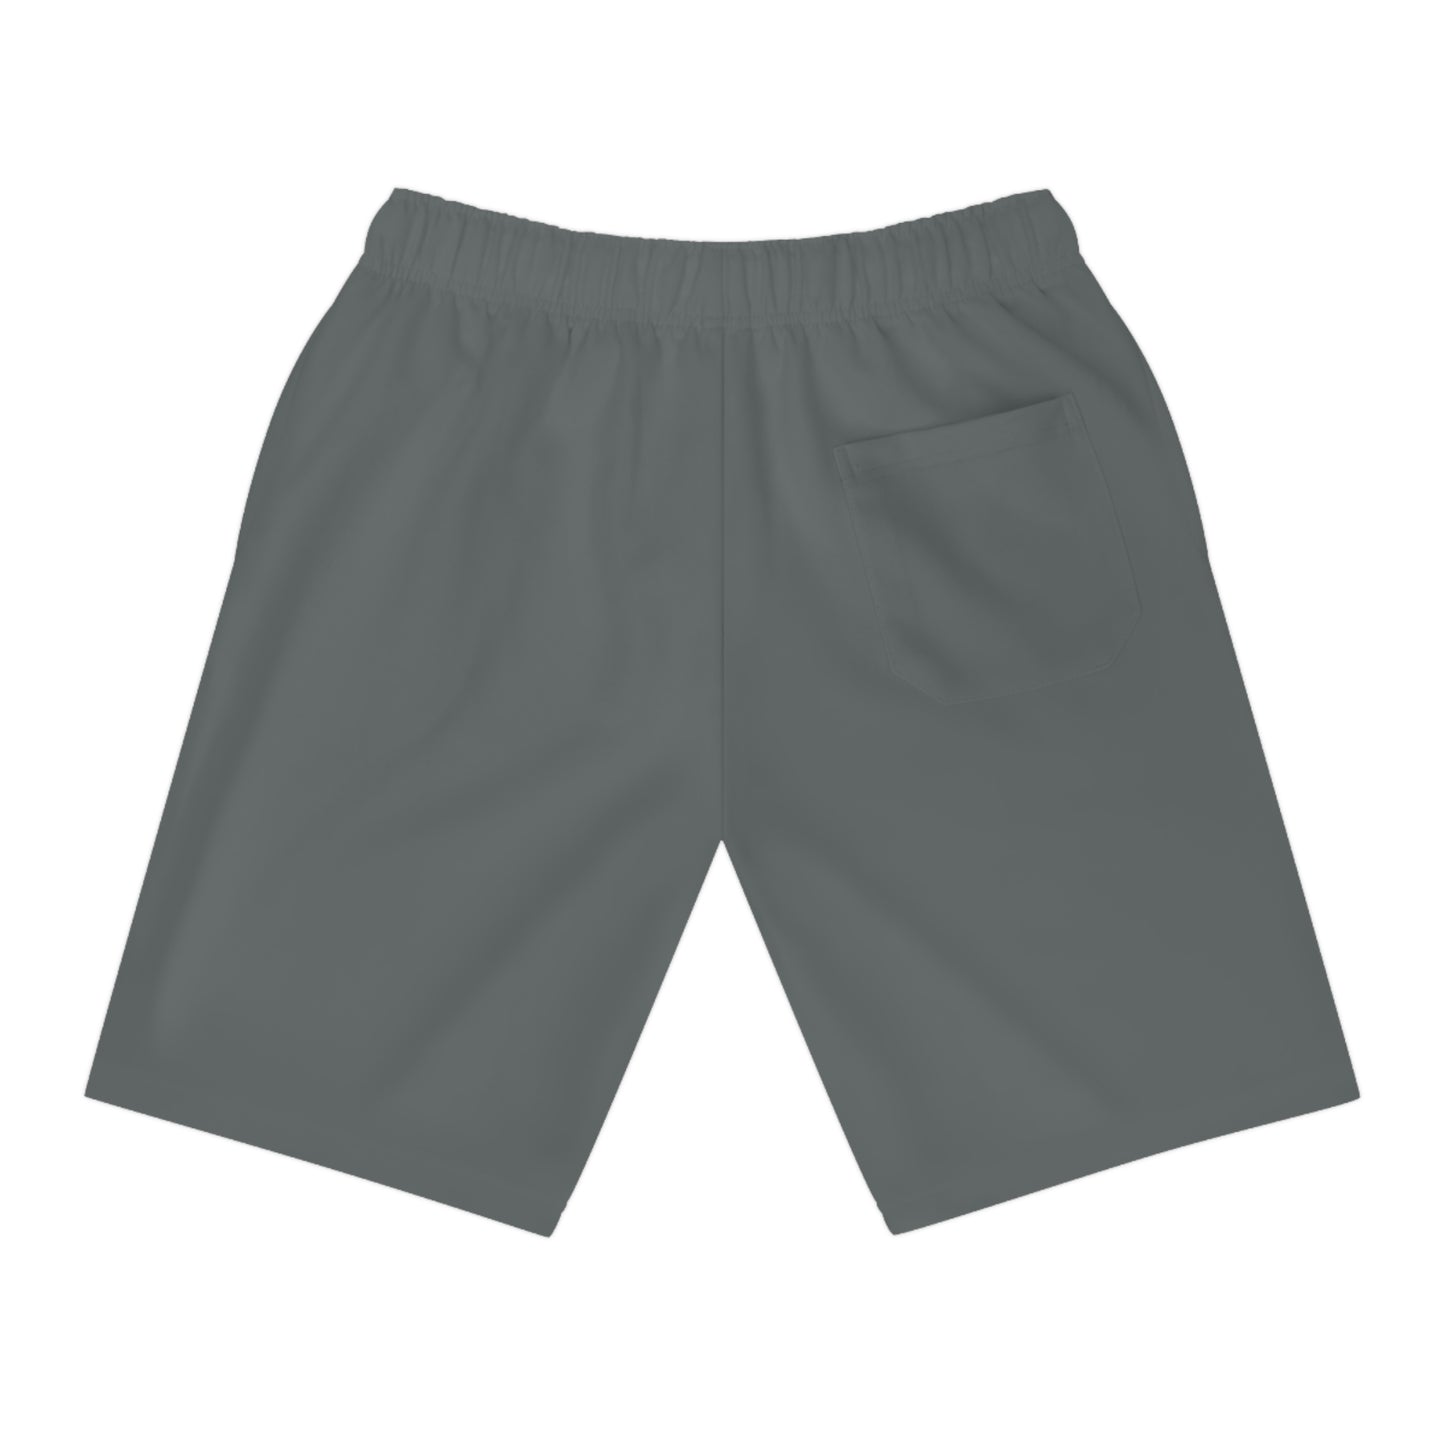 Redford Union Shorts